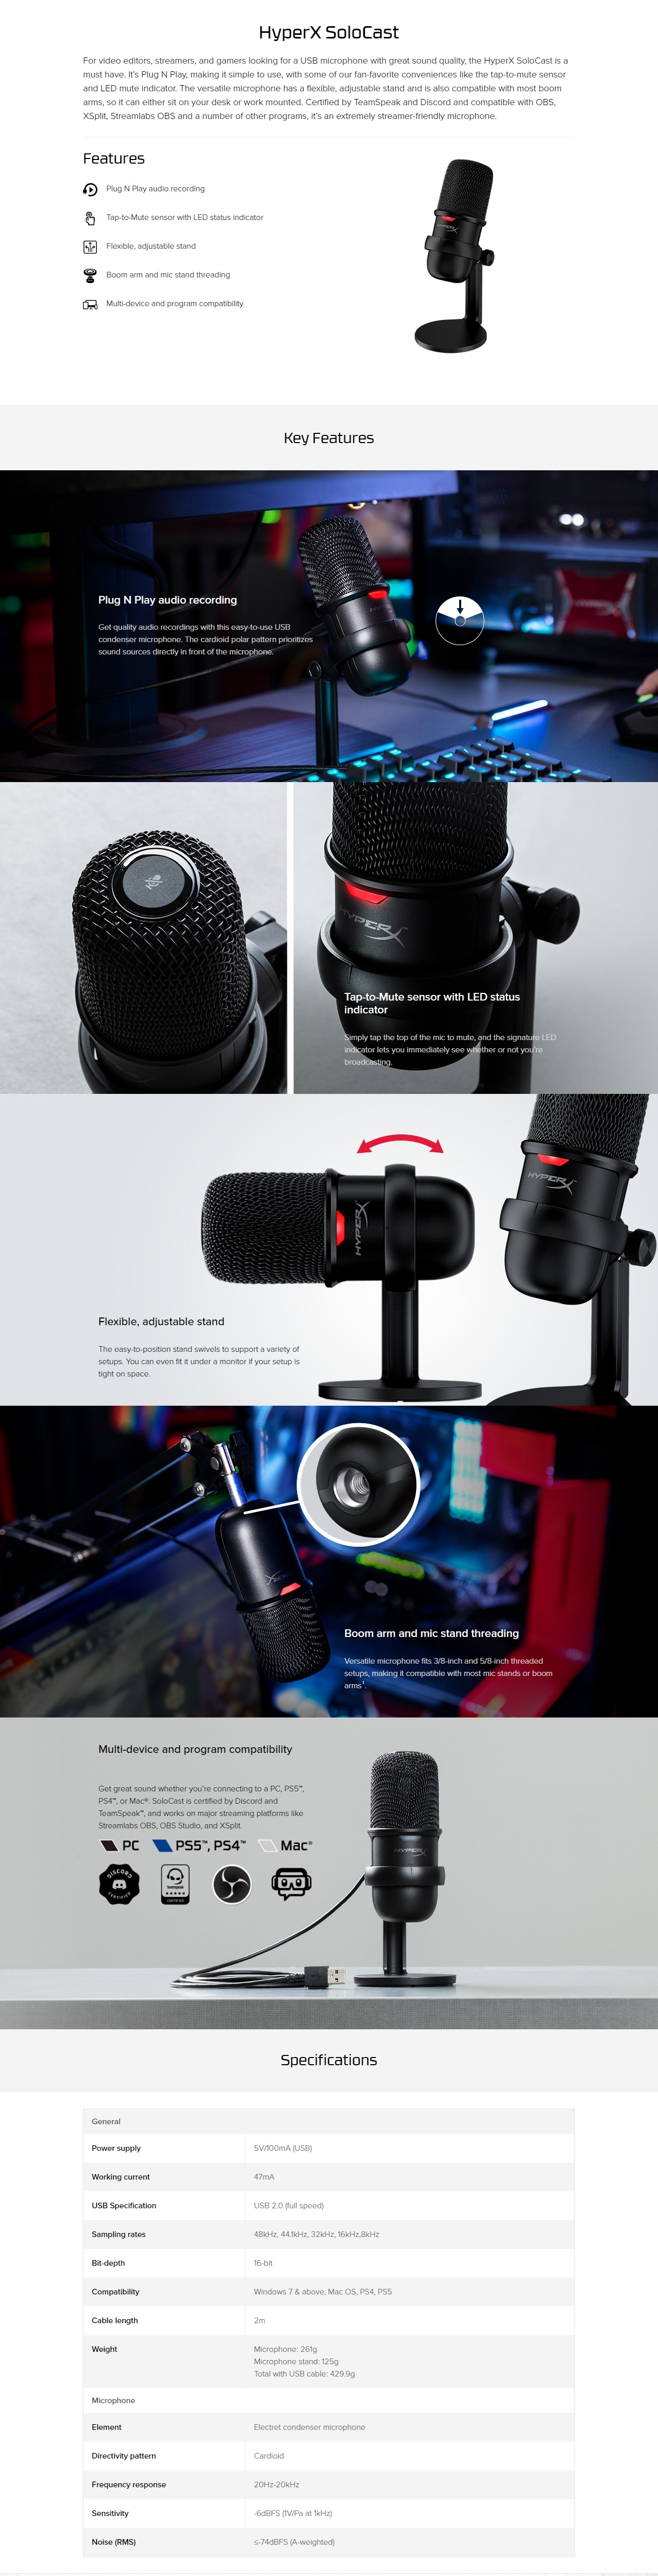 HyperX Solocast Streamer Microphone